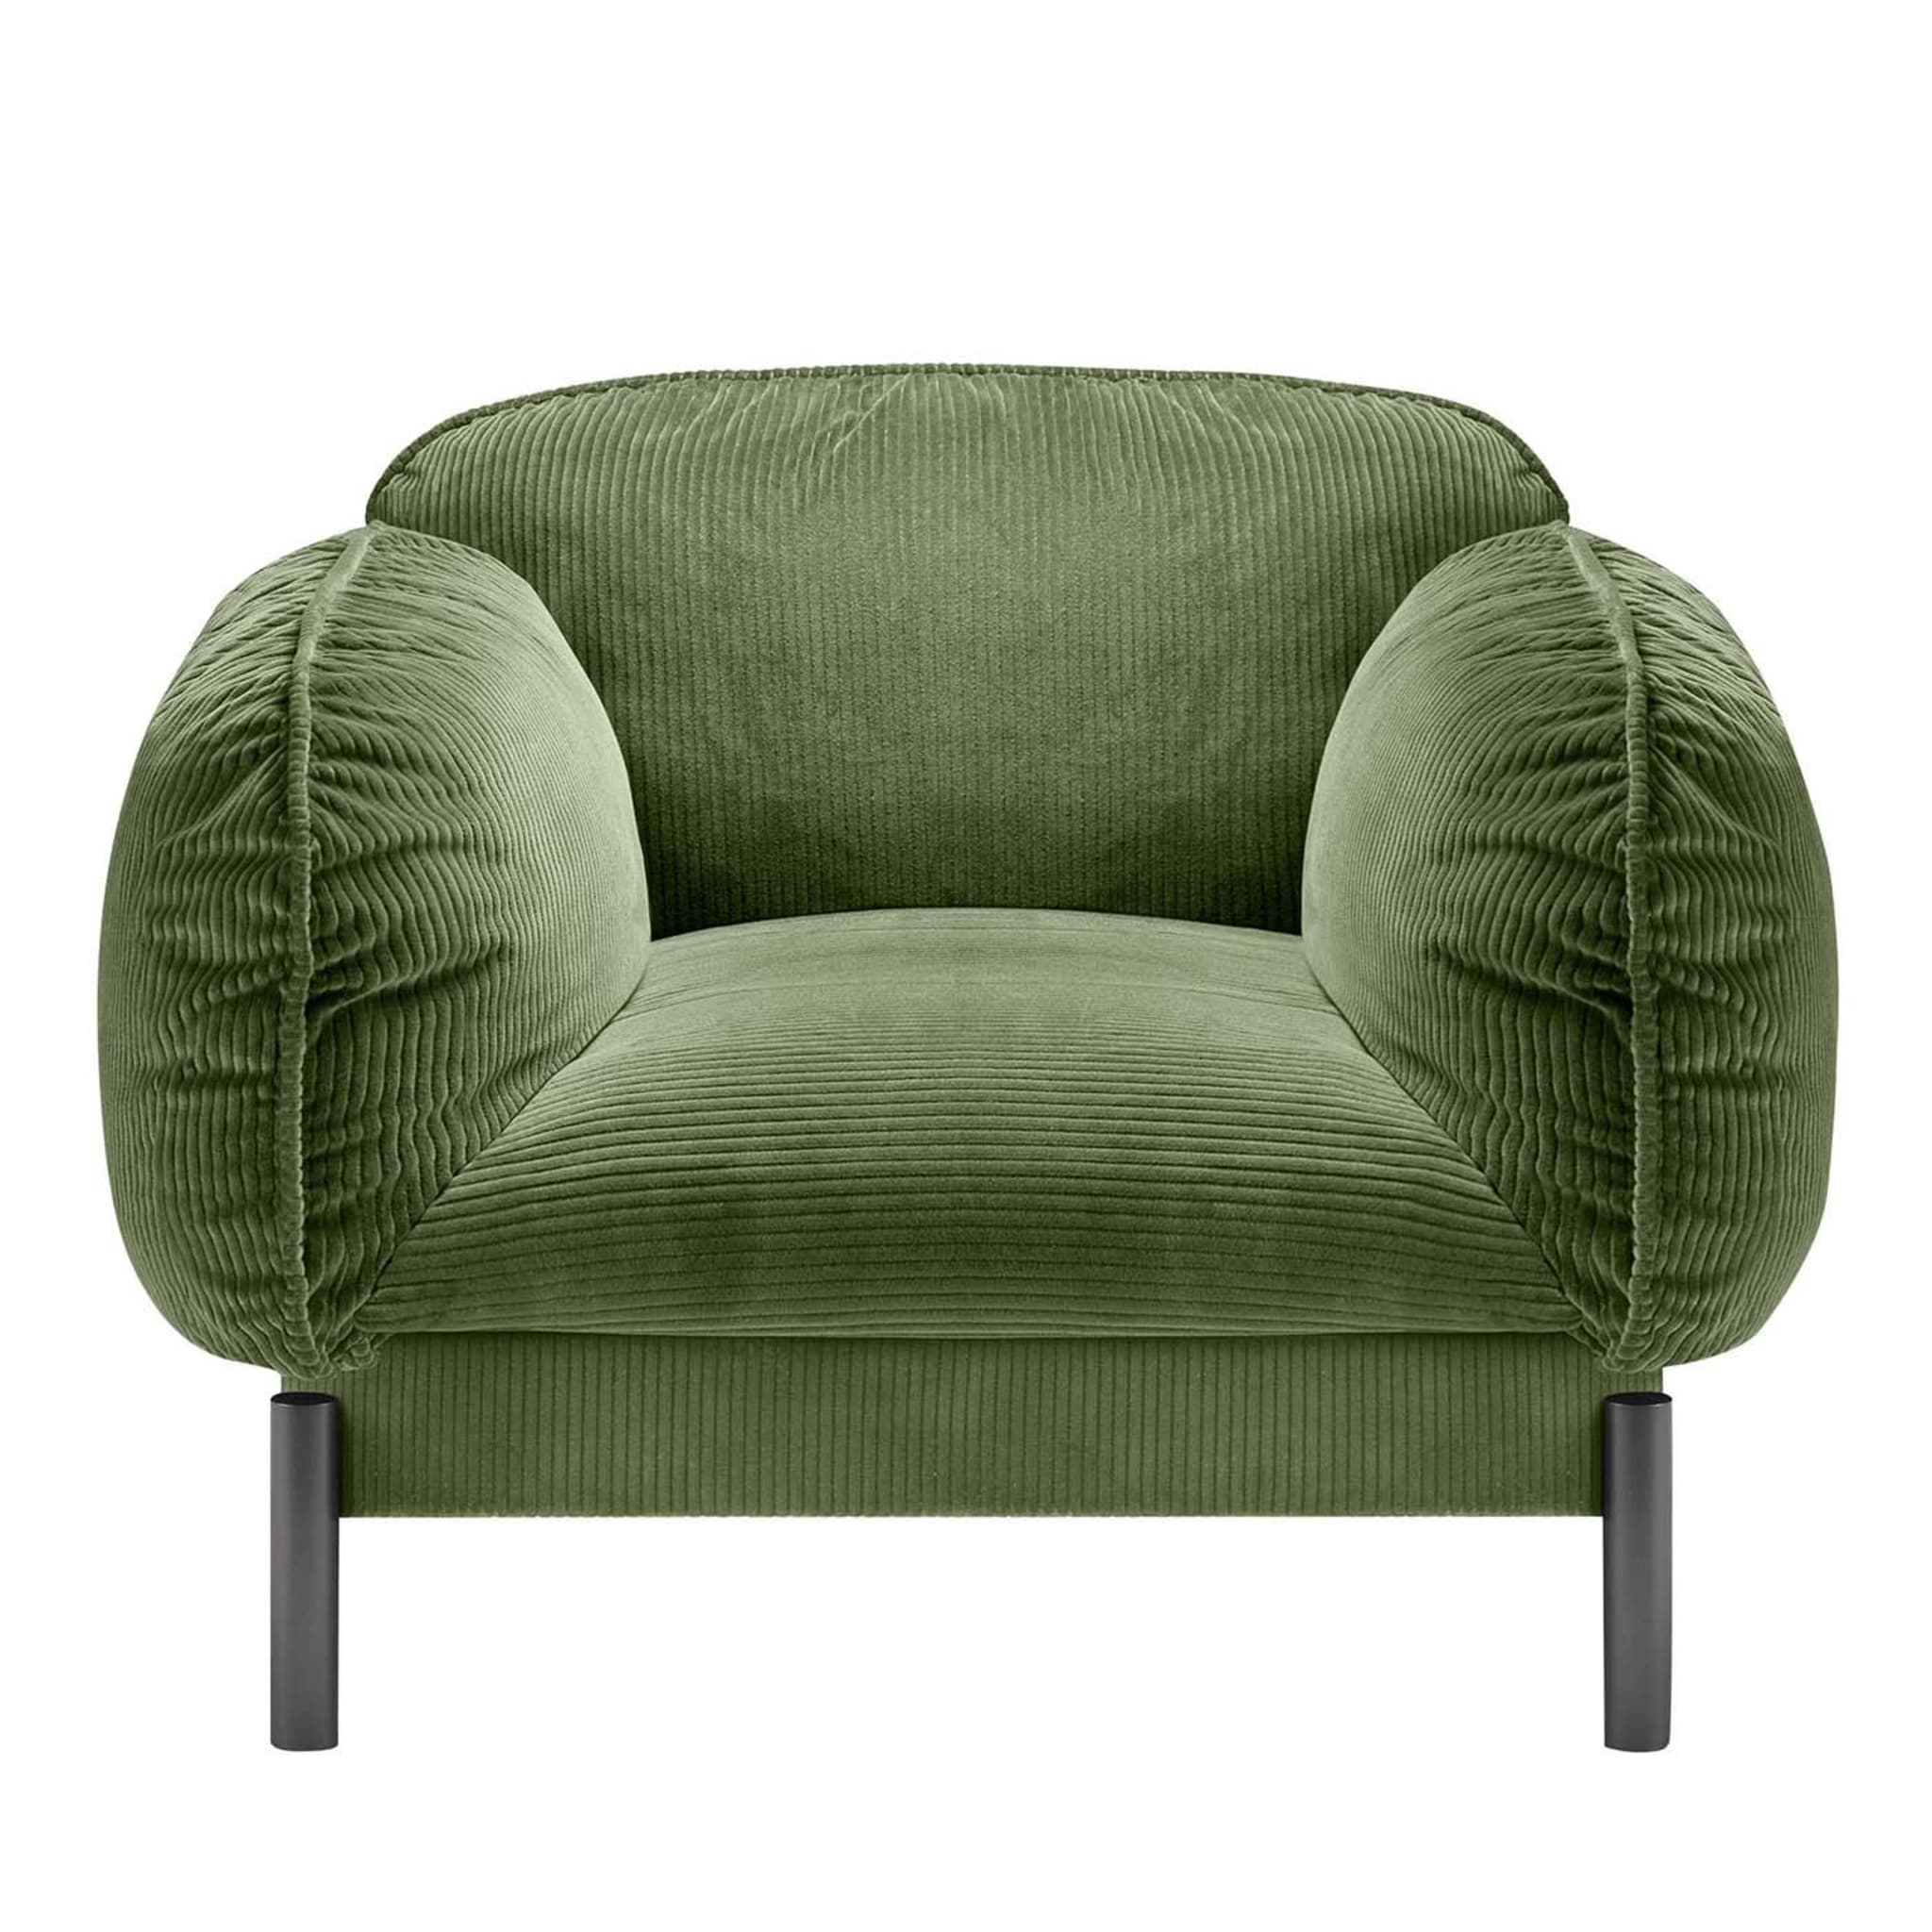 Tarantino Green Lounge Chair - Main view